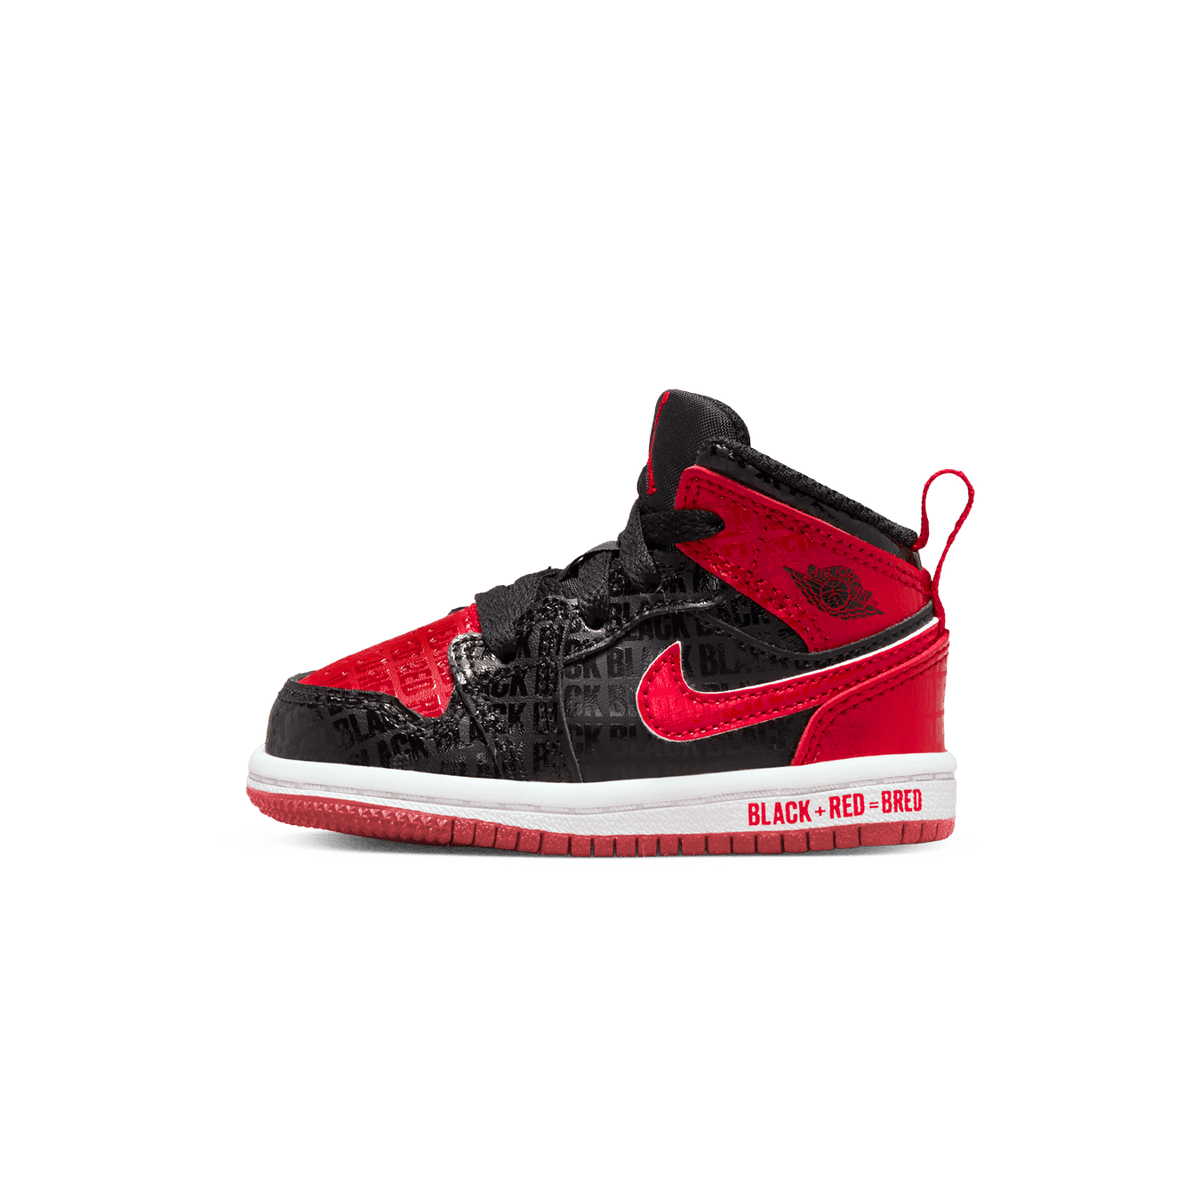 Air Jordan 1 Mid SS TD 'Black + Red = Bred' - Kick Game